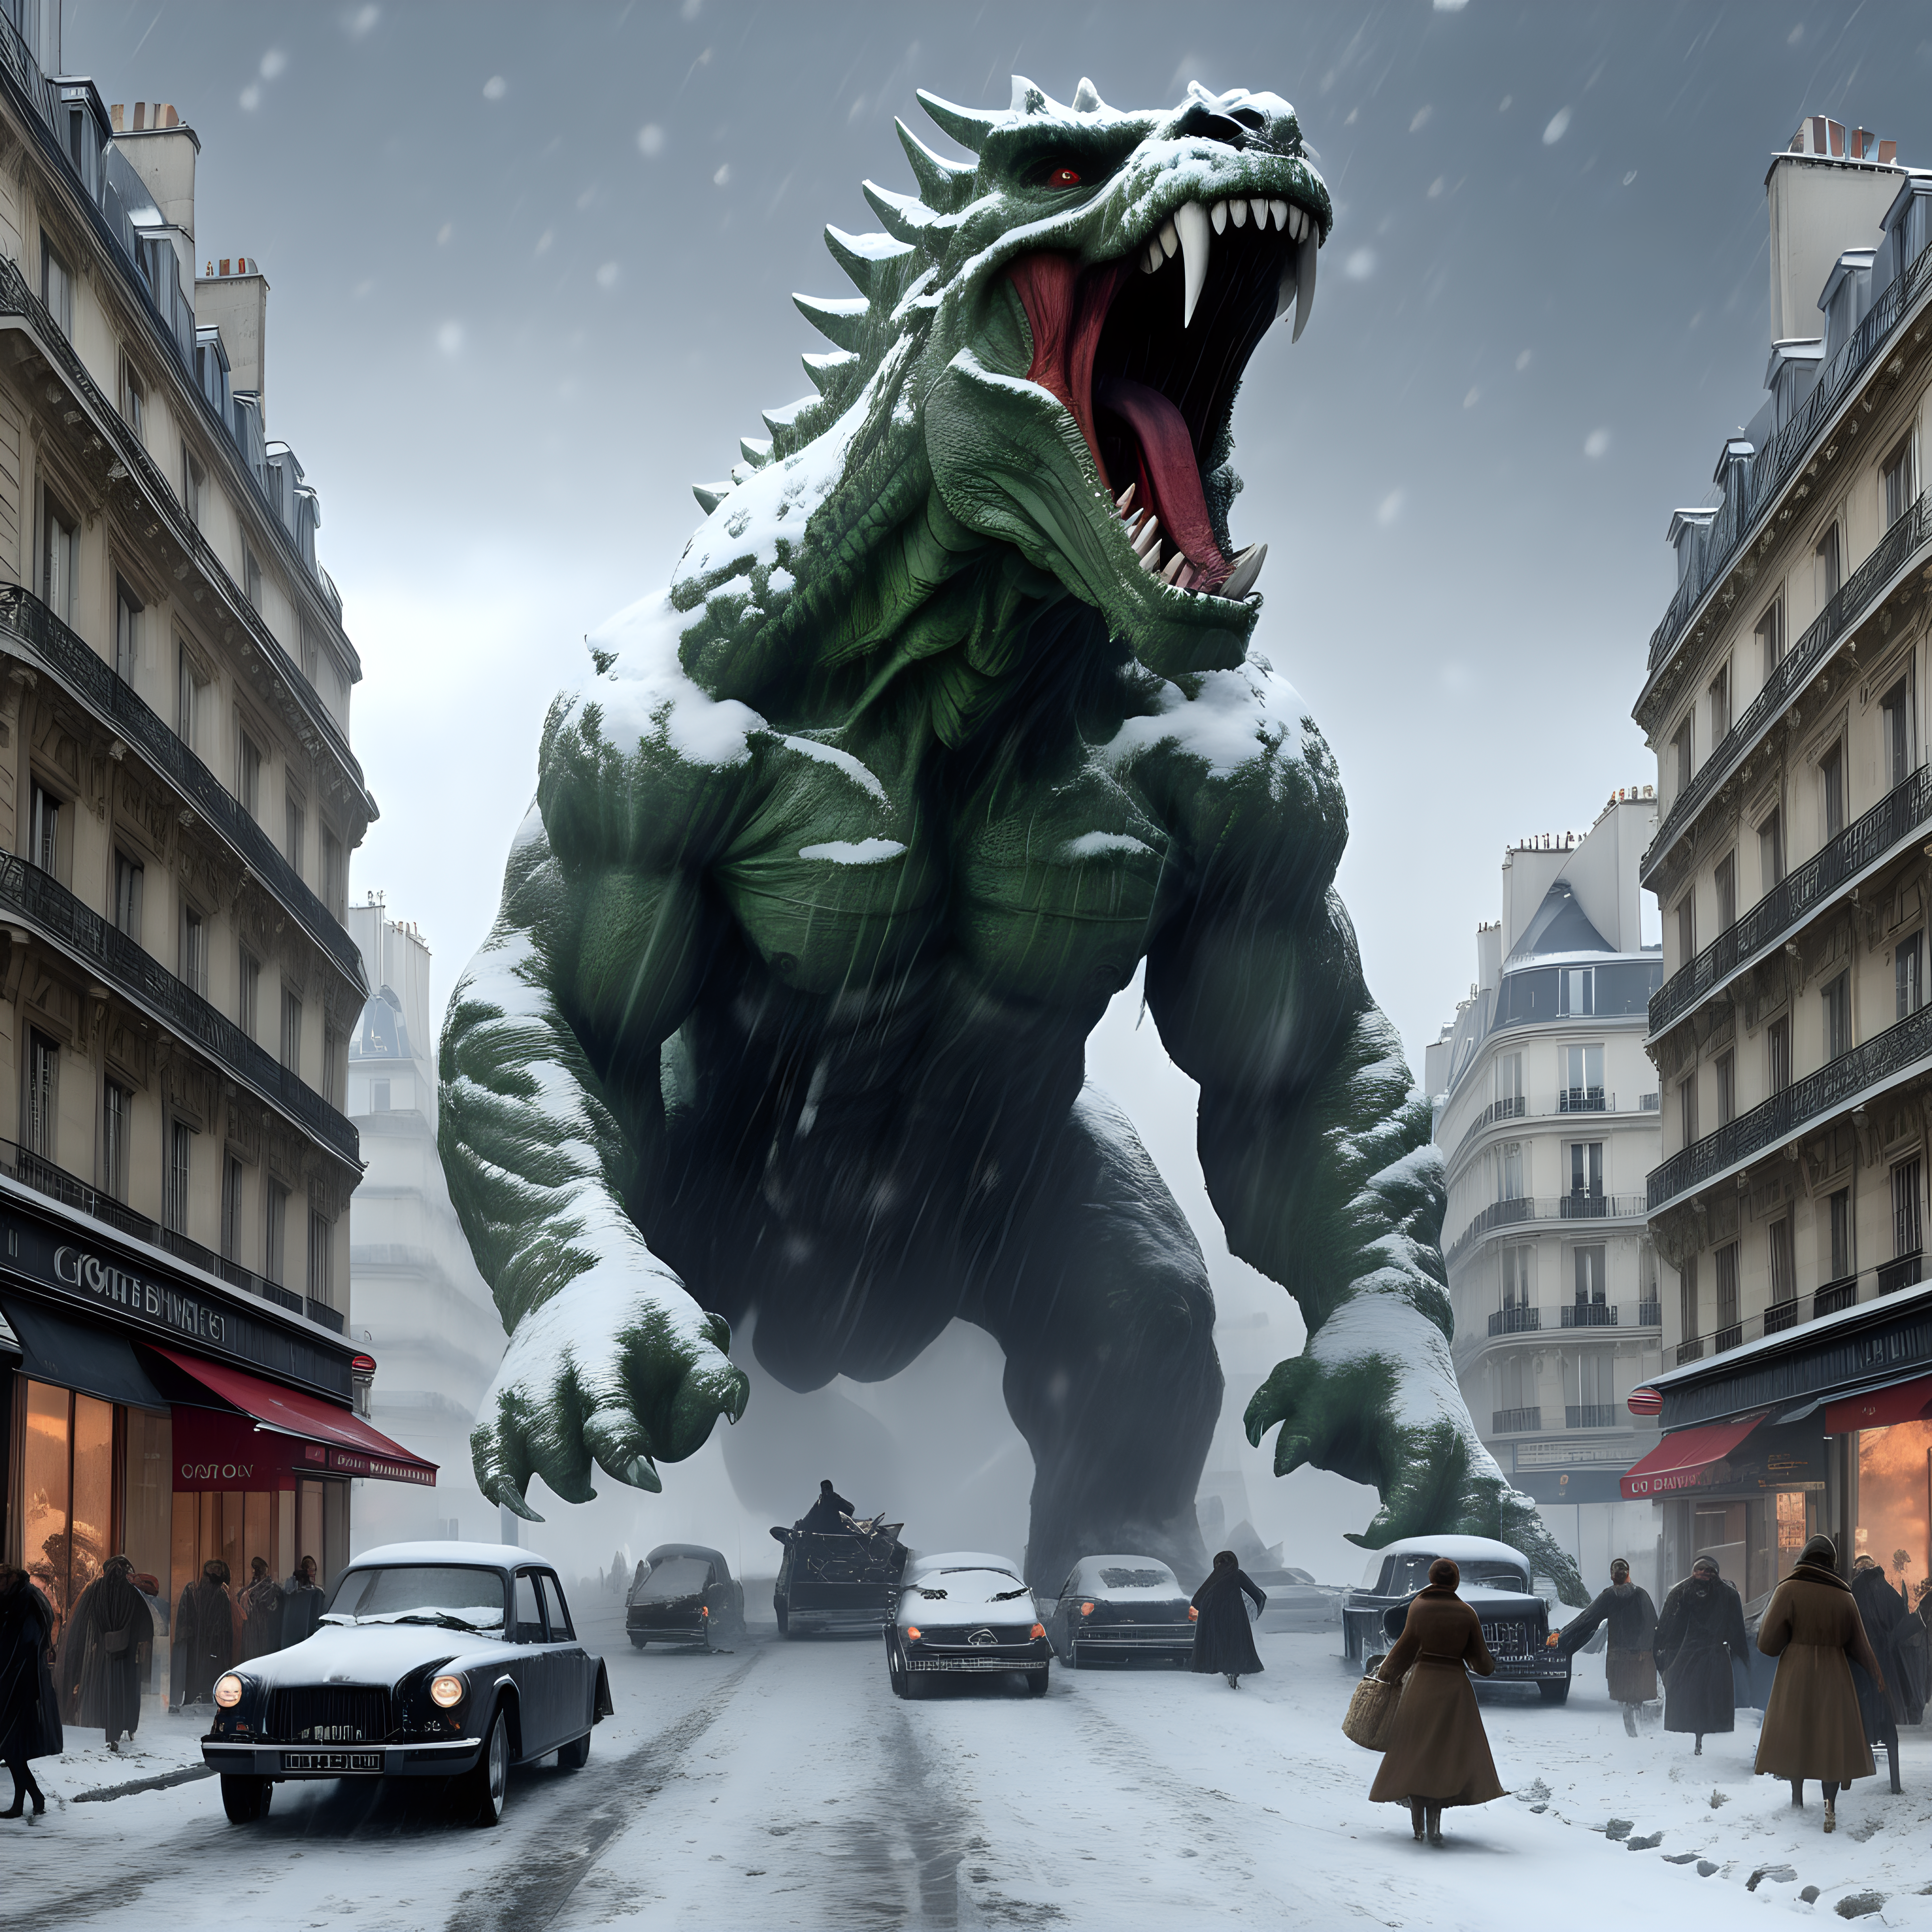 Gorgo destroying Paris in winter snow storm